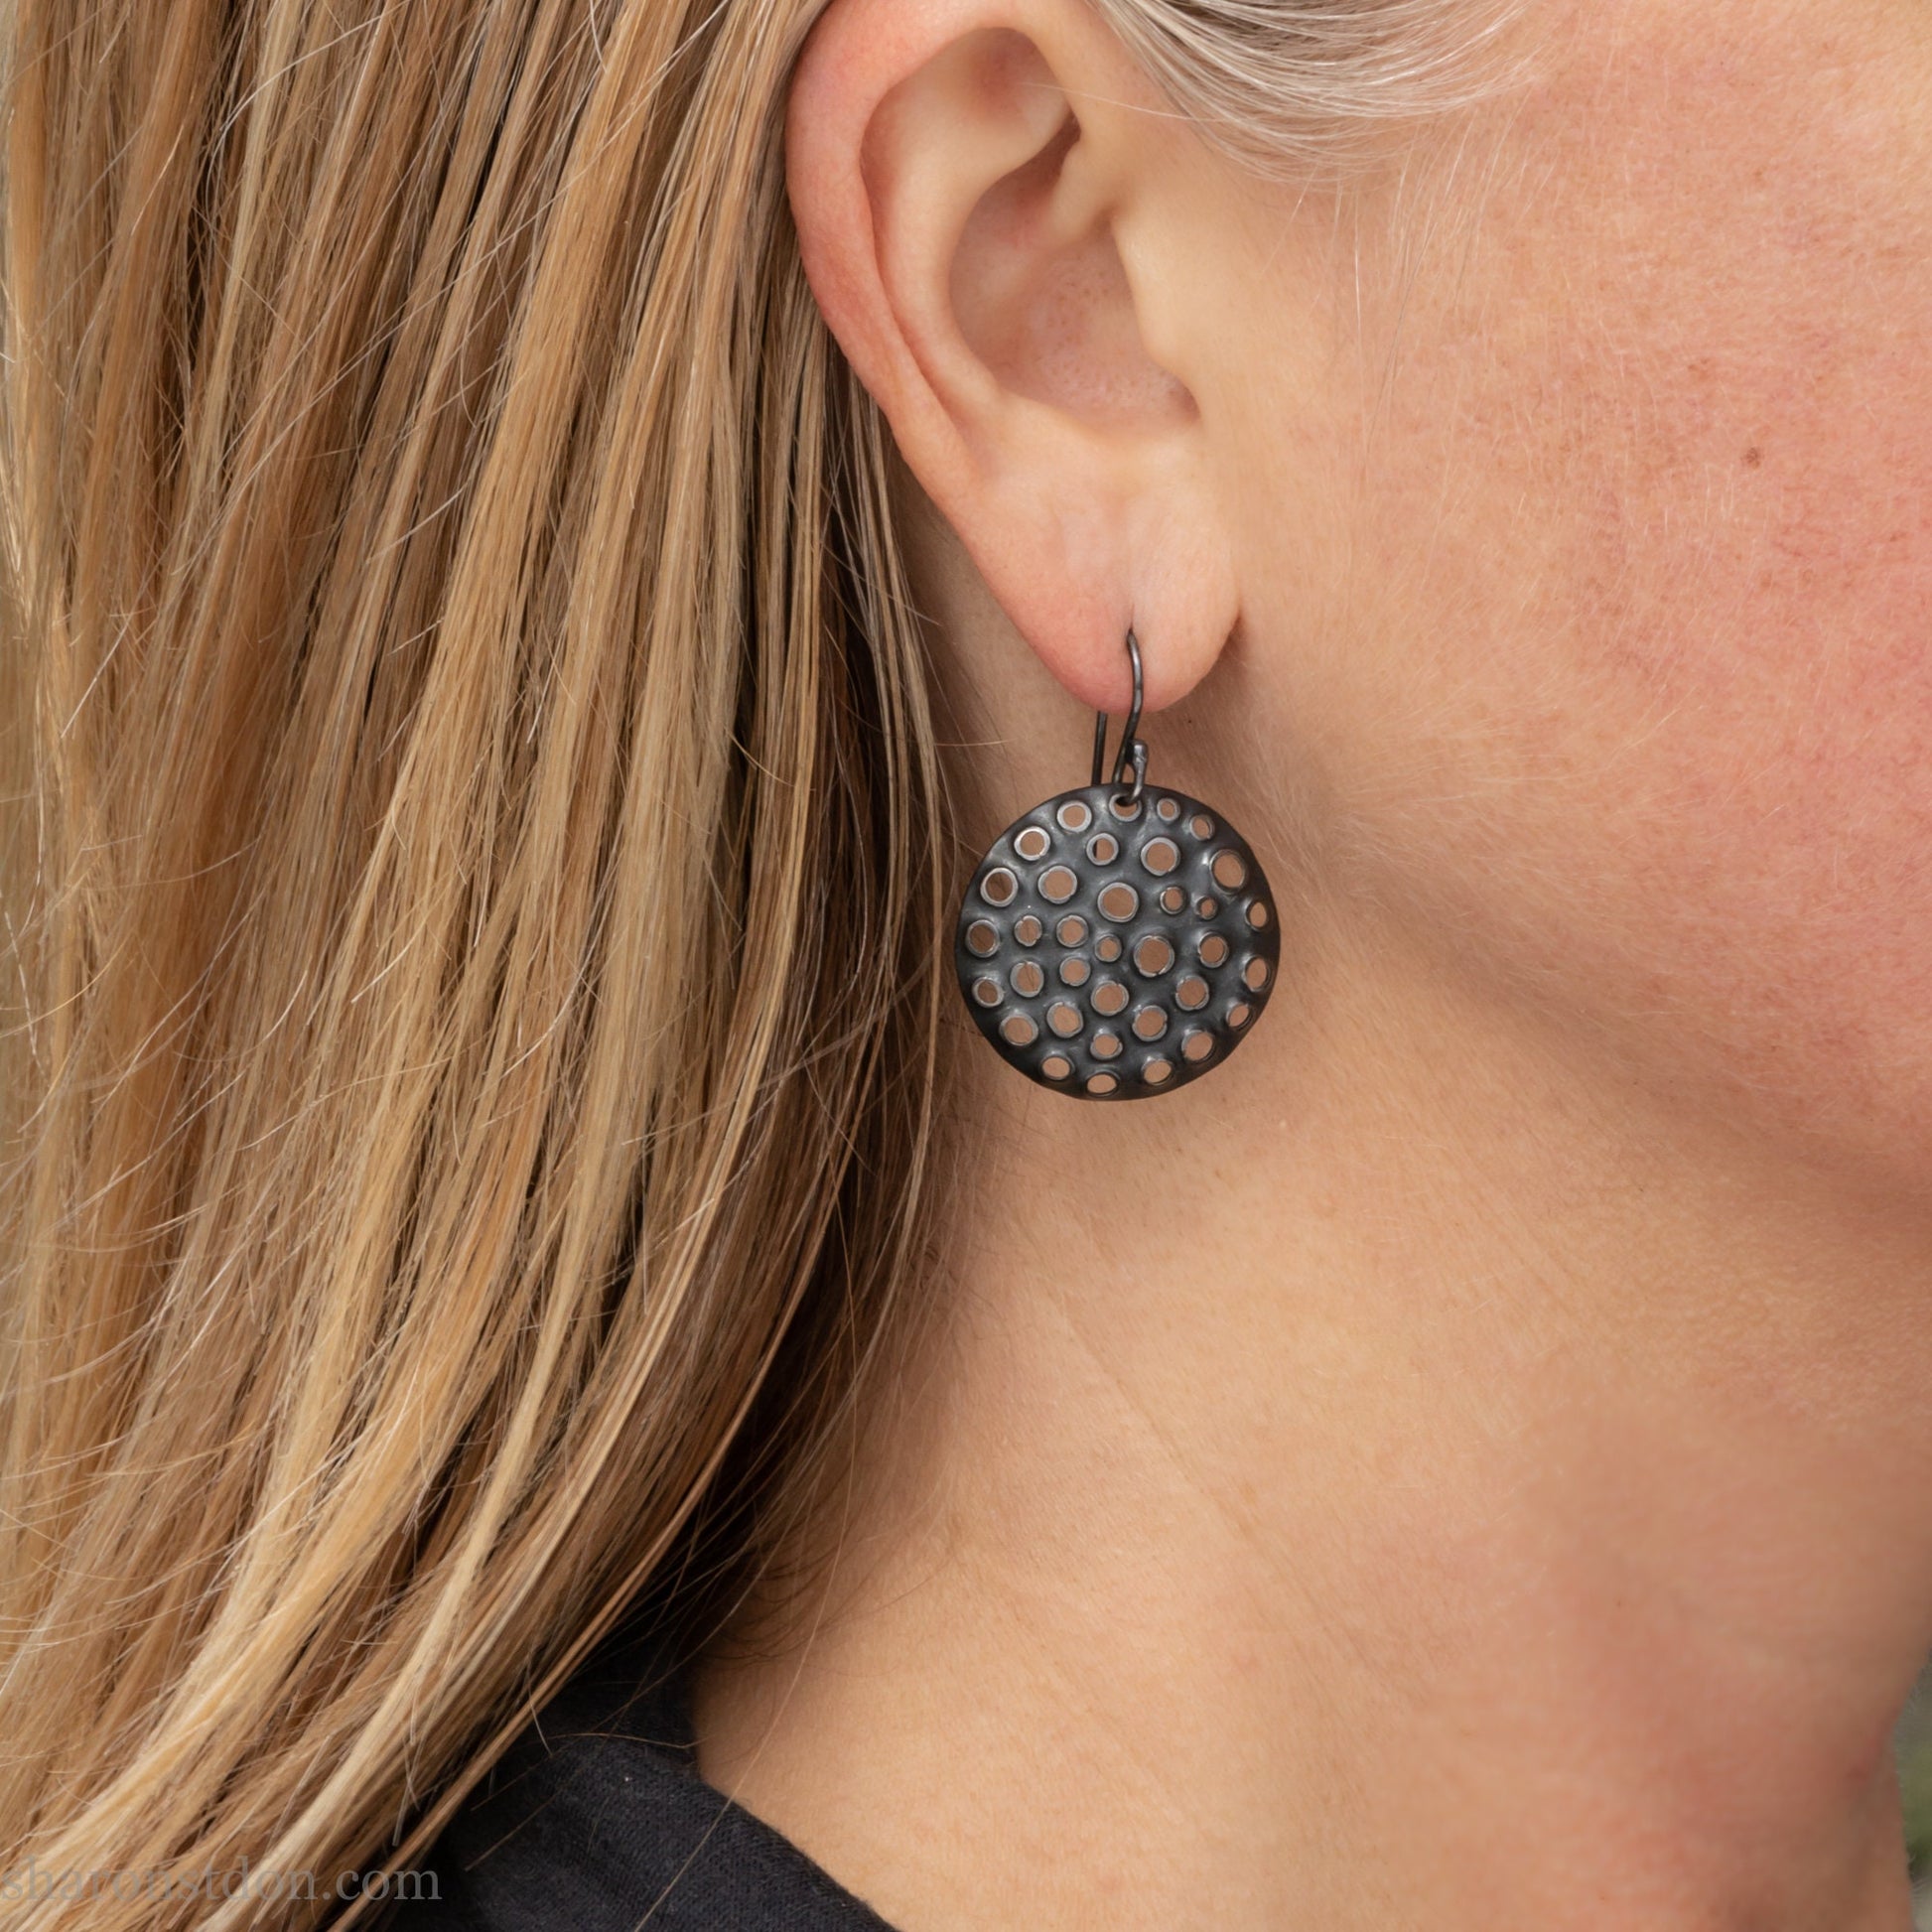 925 sterling silver handmade earrings for women. Comfortable, light, round disc, dangle earrings w/ mesh dots and ear wire hooks.